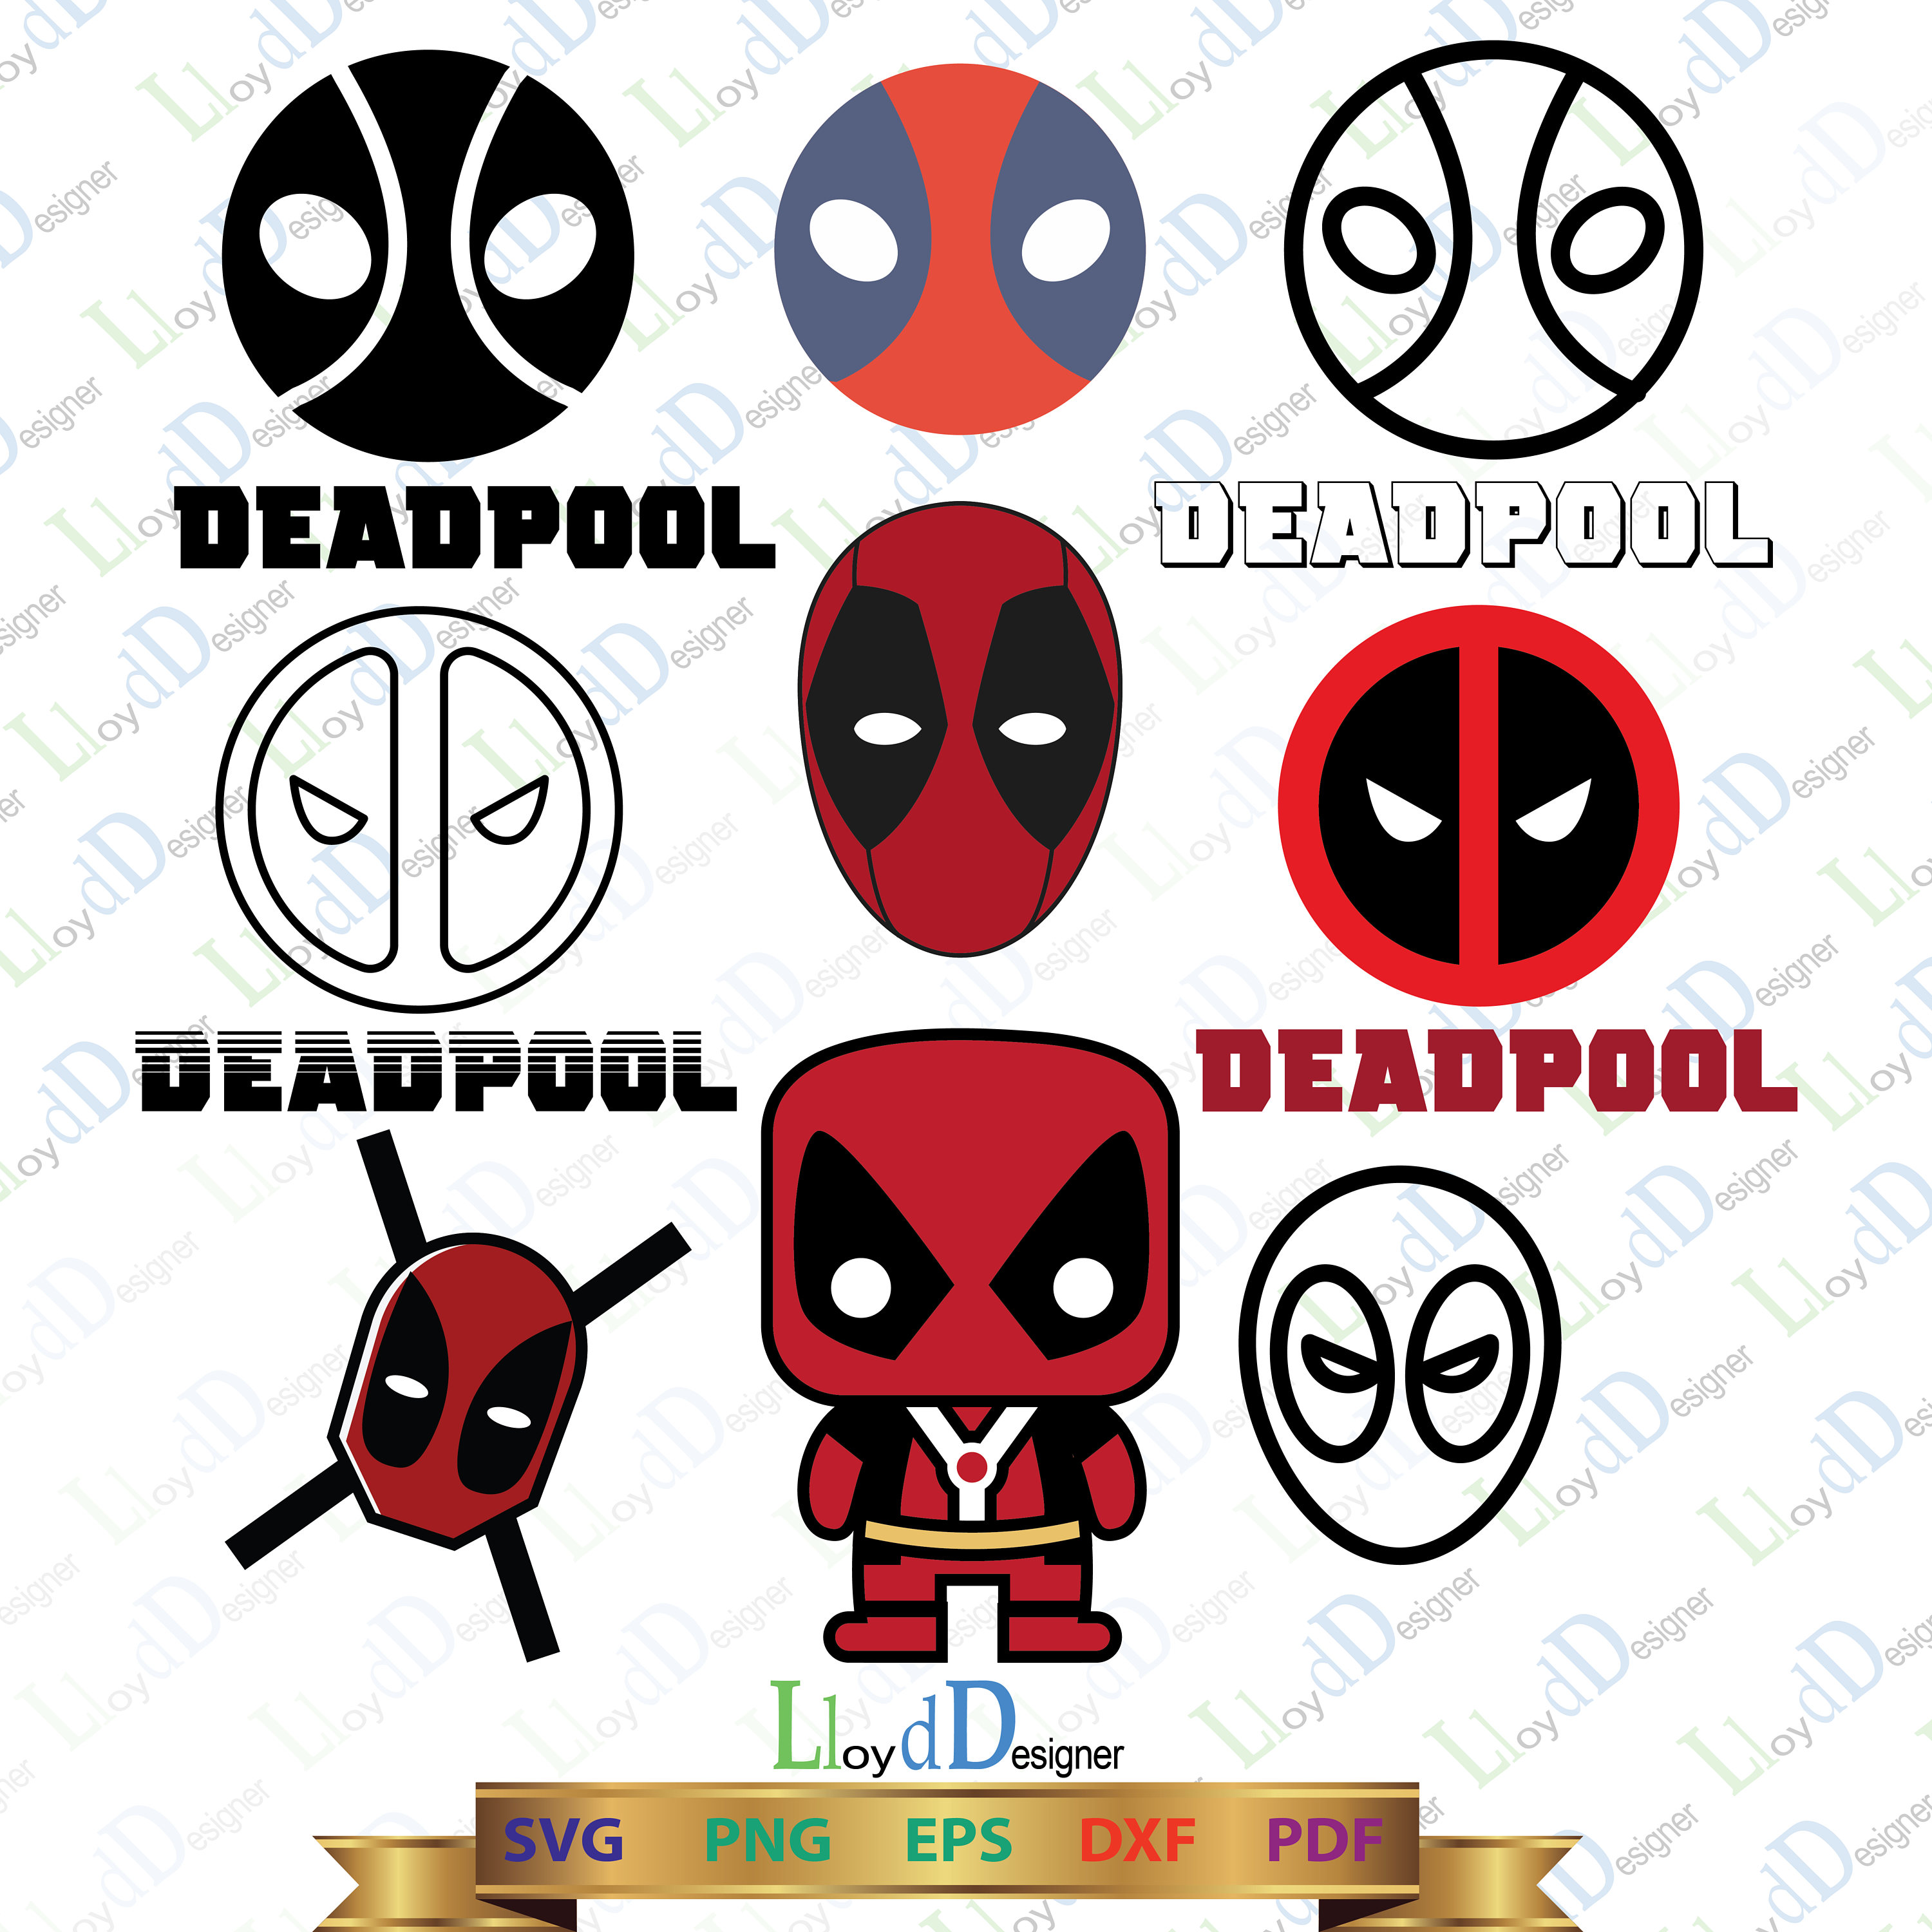 Download Deadpool Svg Dxf Eps Png Pdf deadpool art deadpool logo